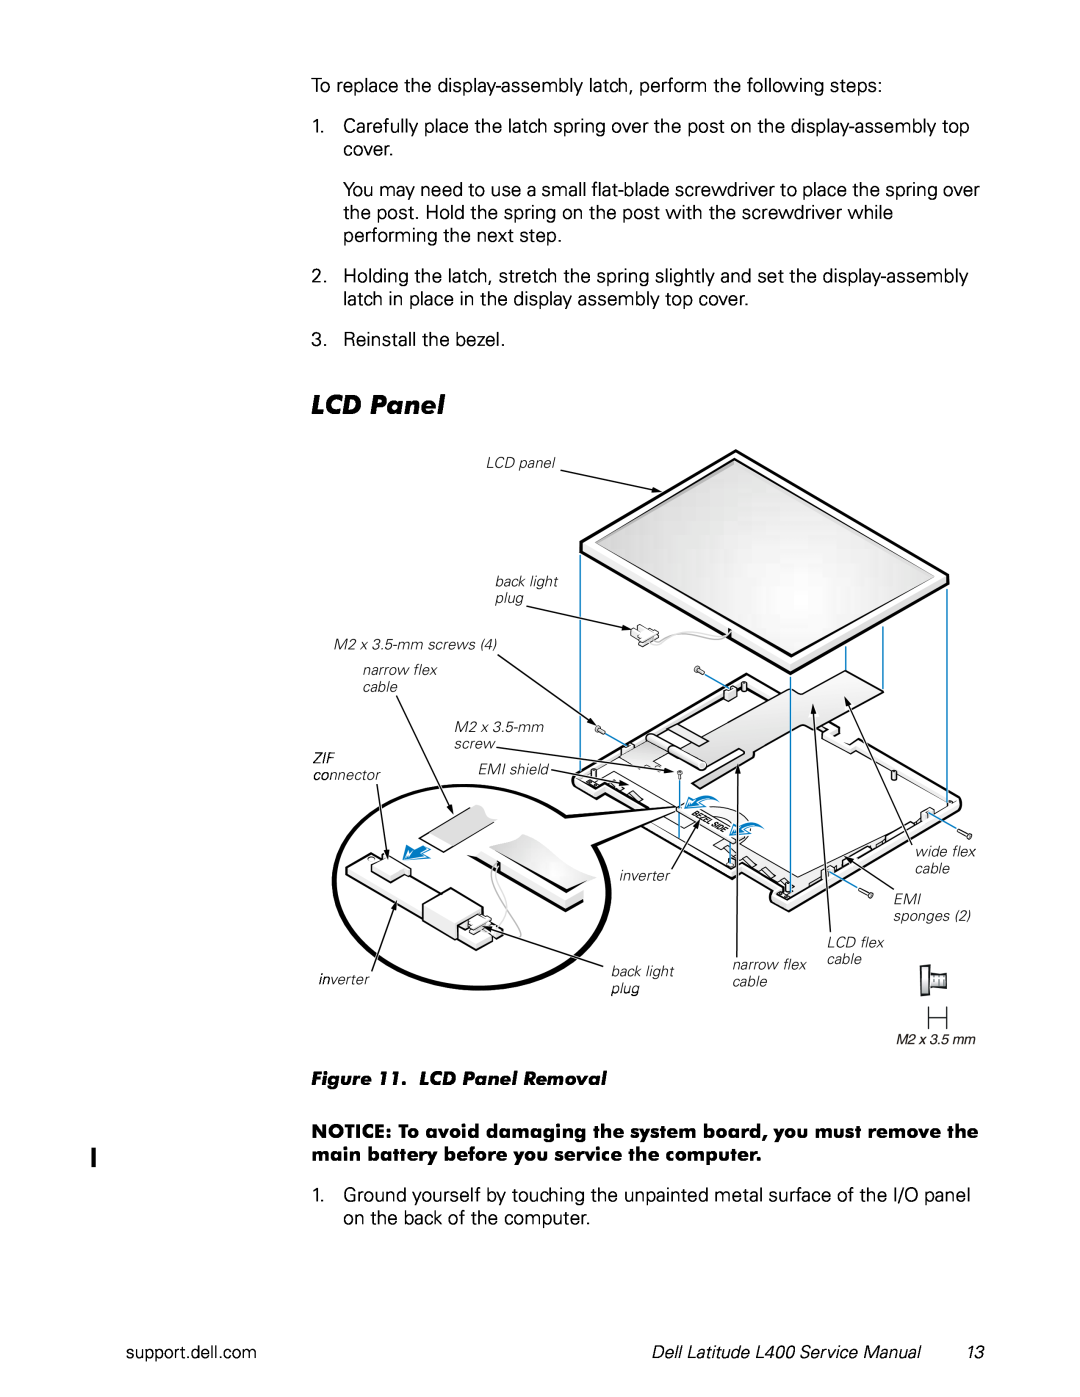 Dell L400 service manual LCD Panel Removal 